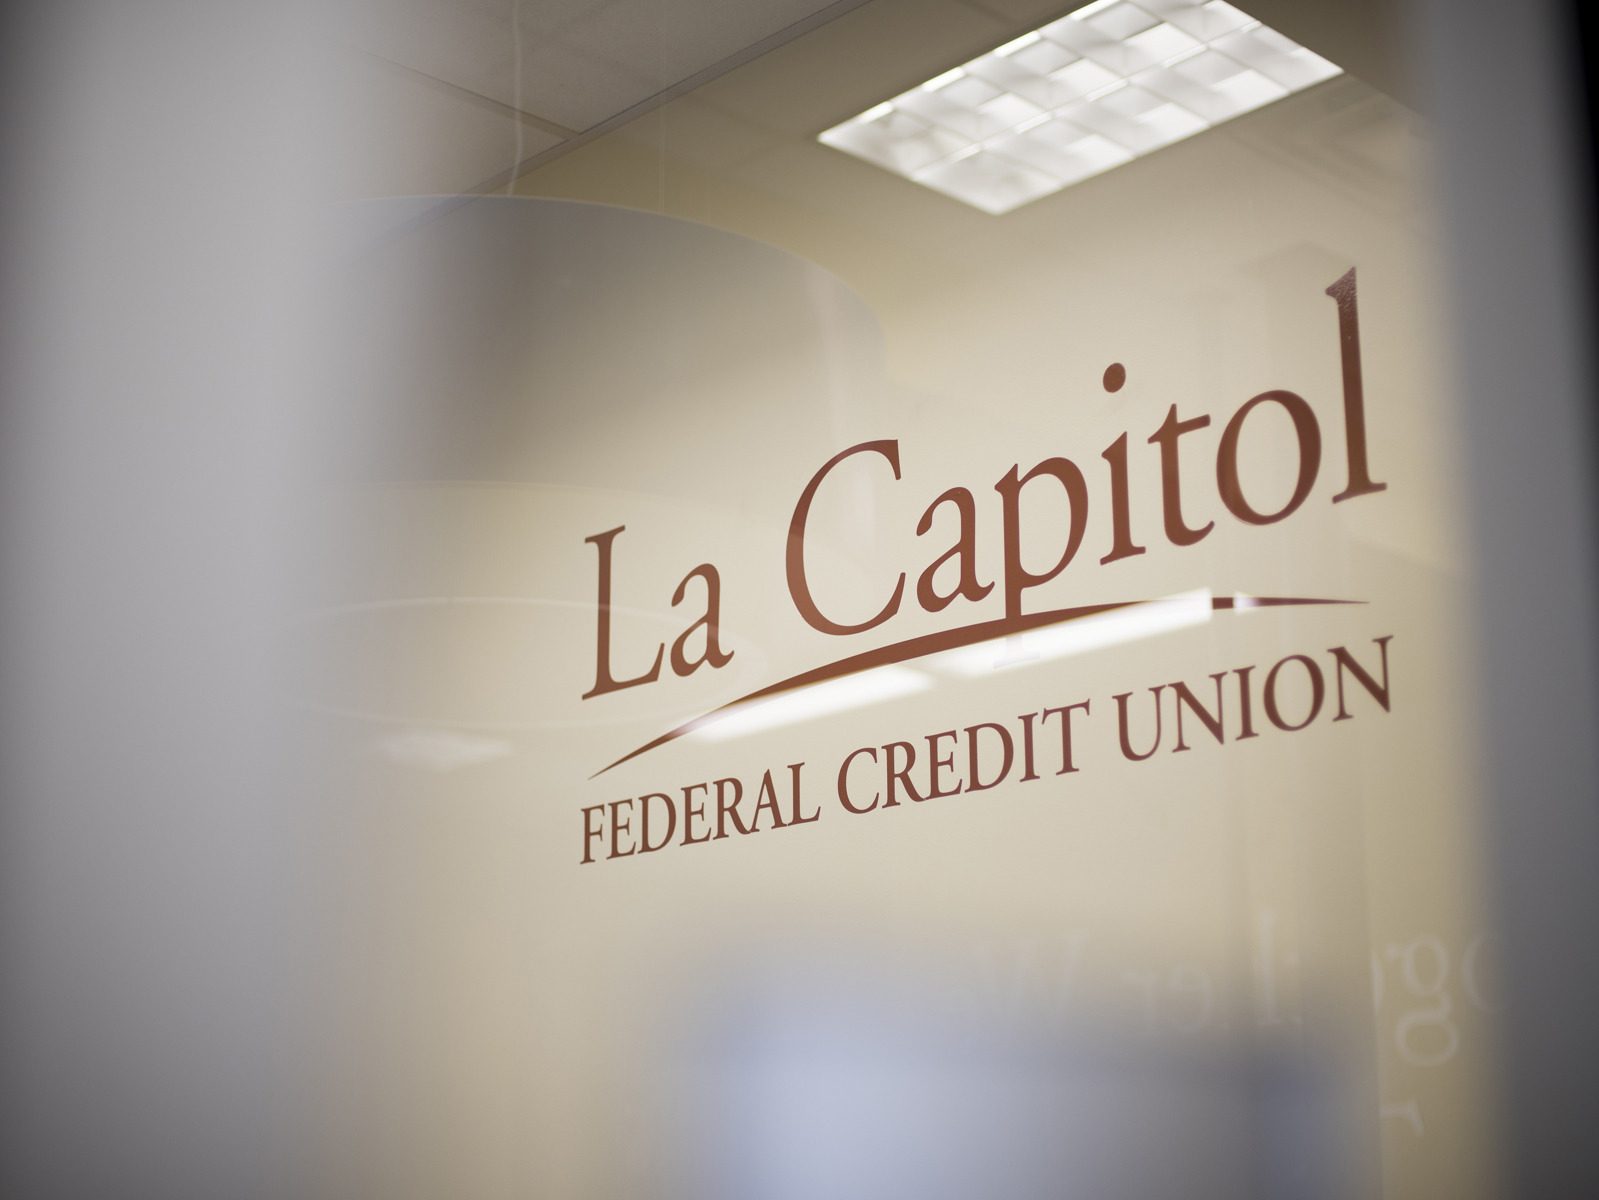 La Capitol Federal Credit Union - Wayfinding